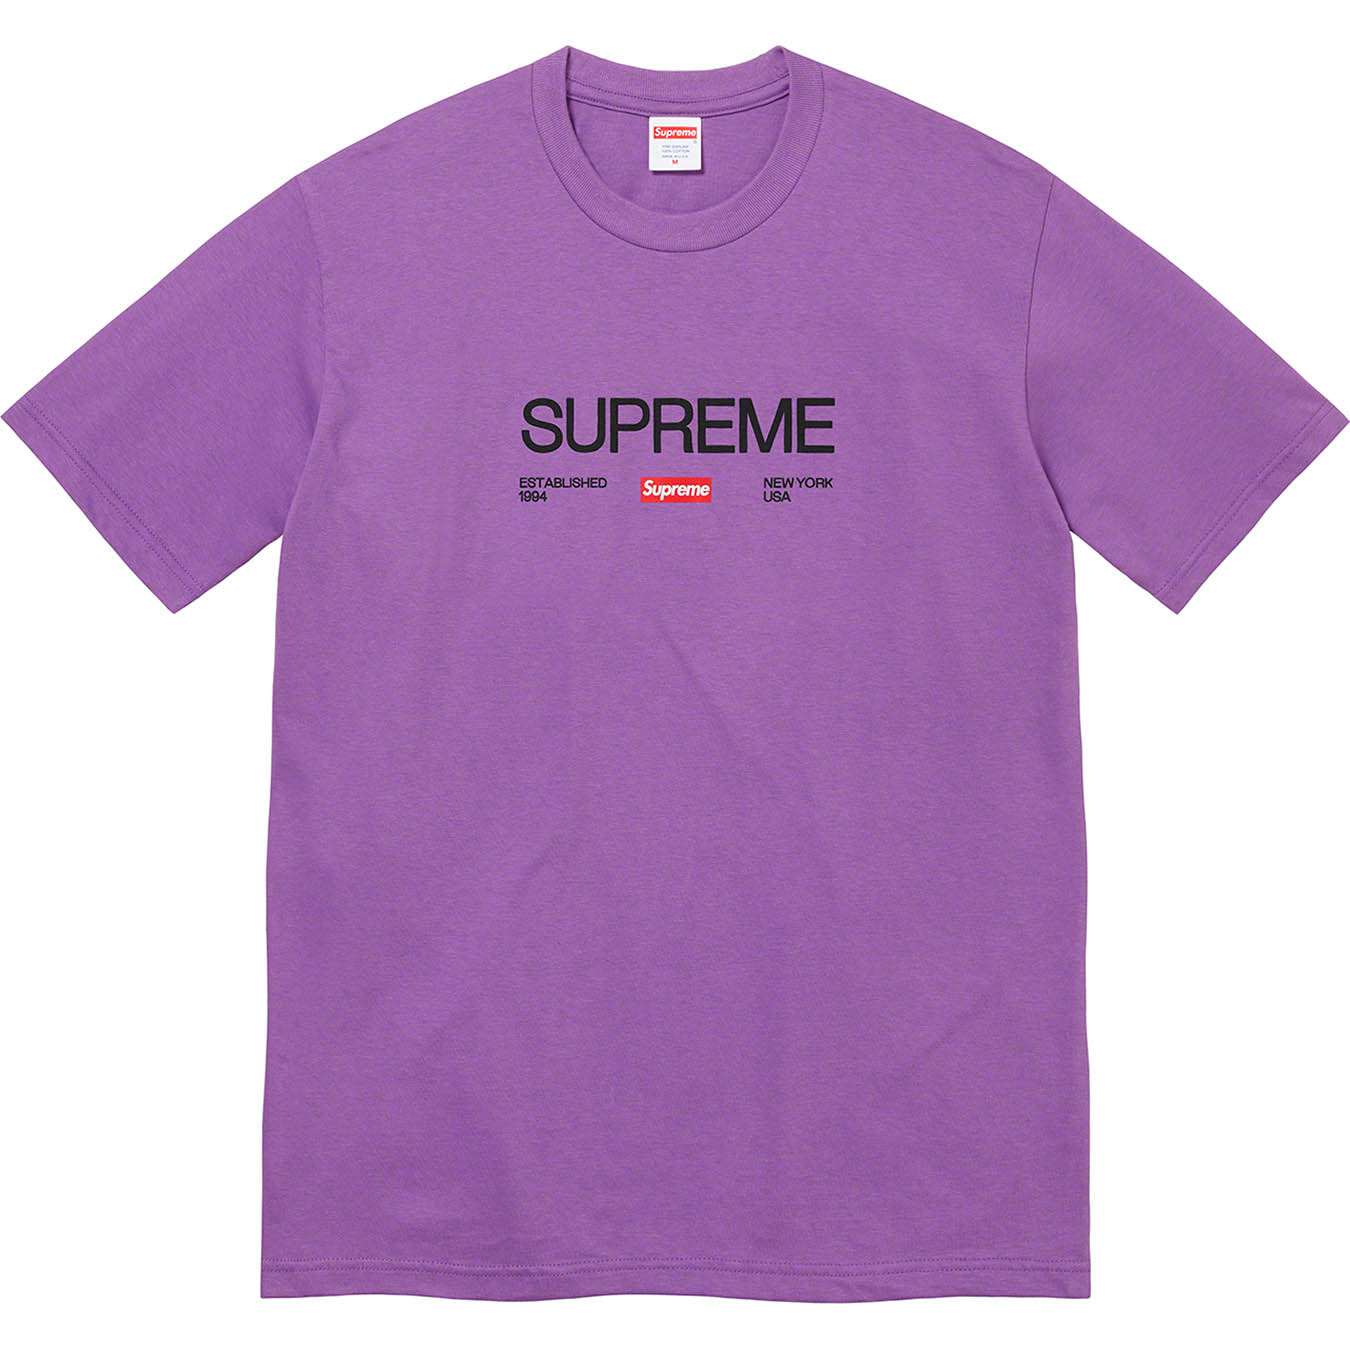 Supreme Est. 1994 Tee